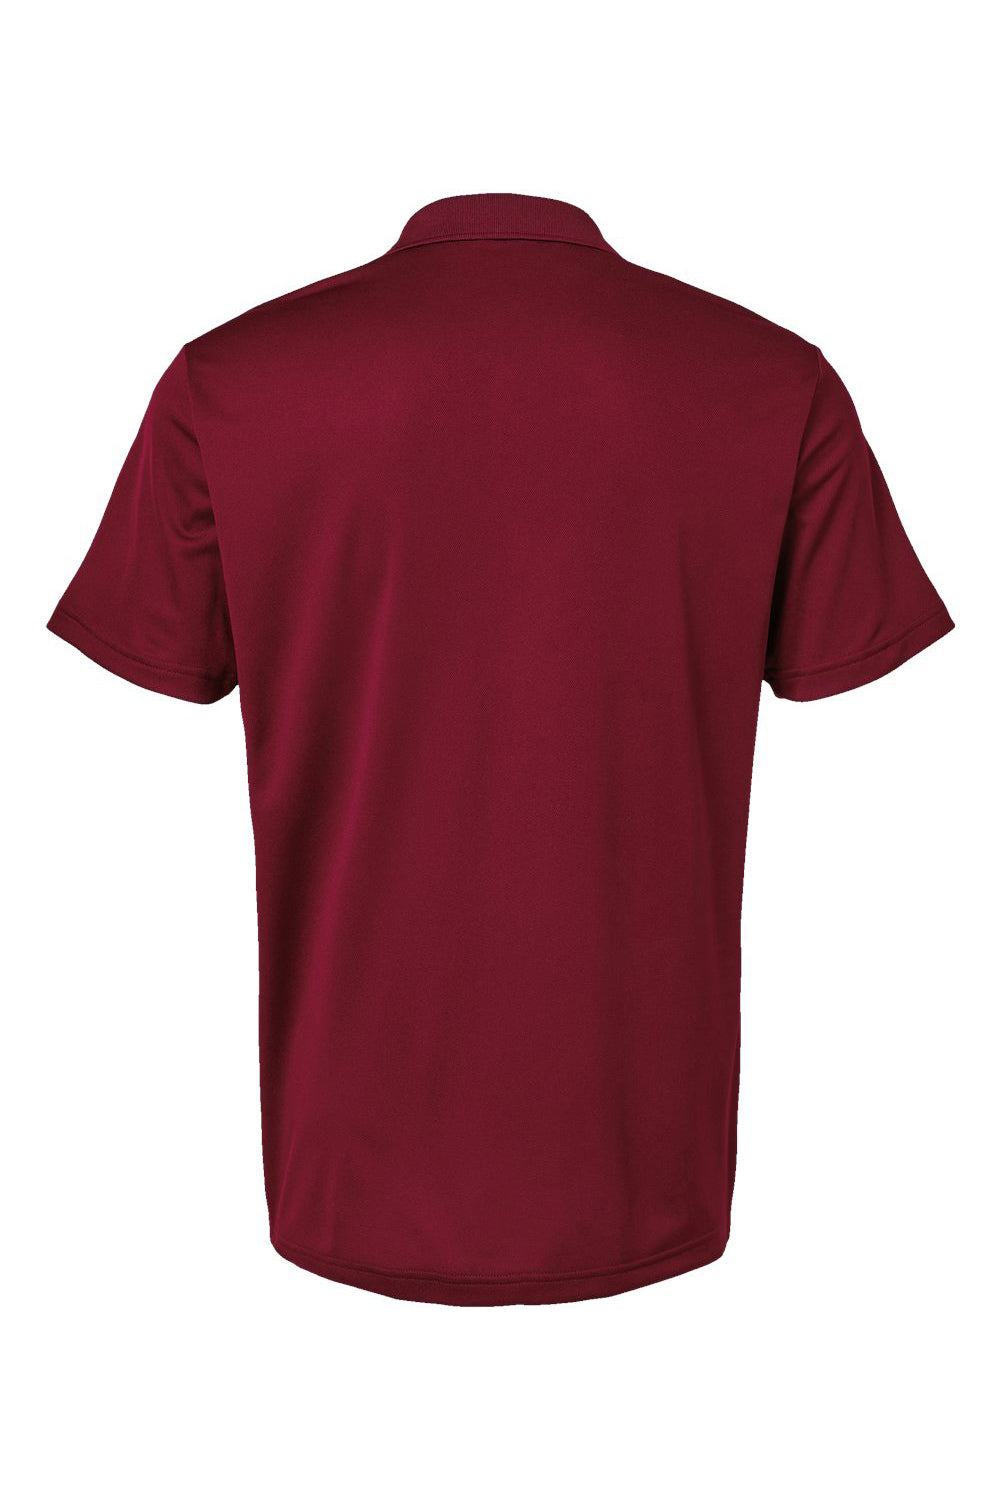 Adidas A430 Mens UV Protection Short Sleeve Polo Shirt Collegiate Burgundy Flat Back